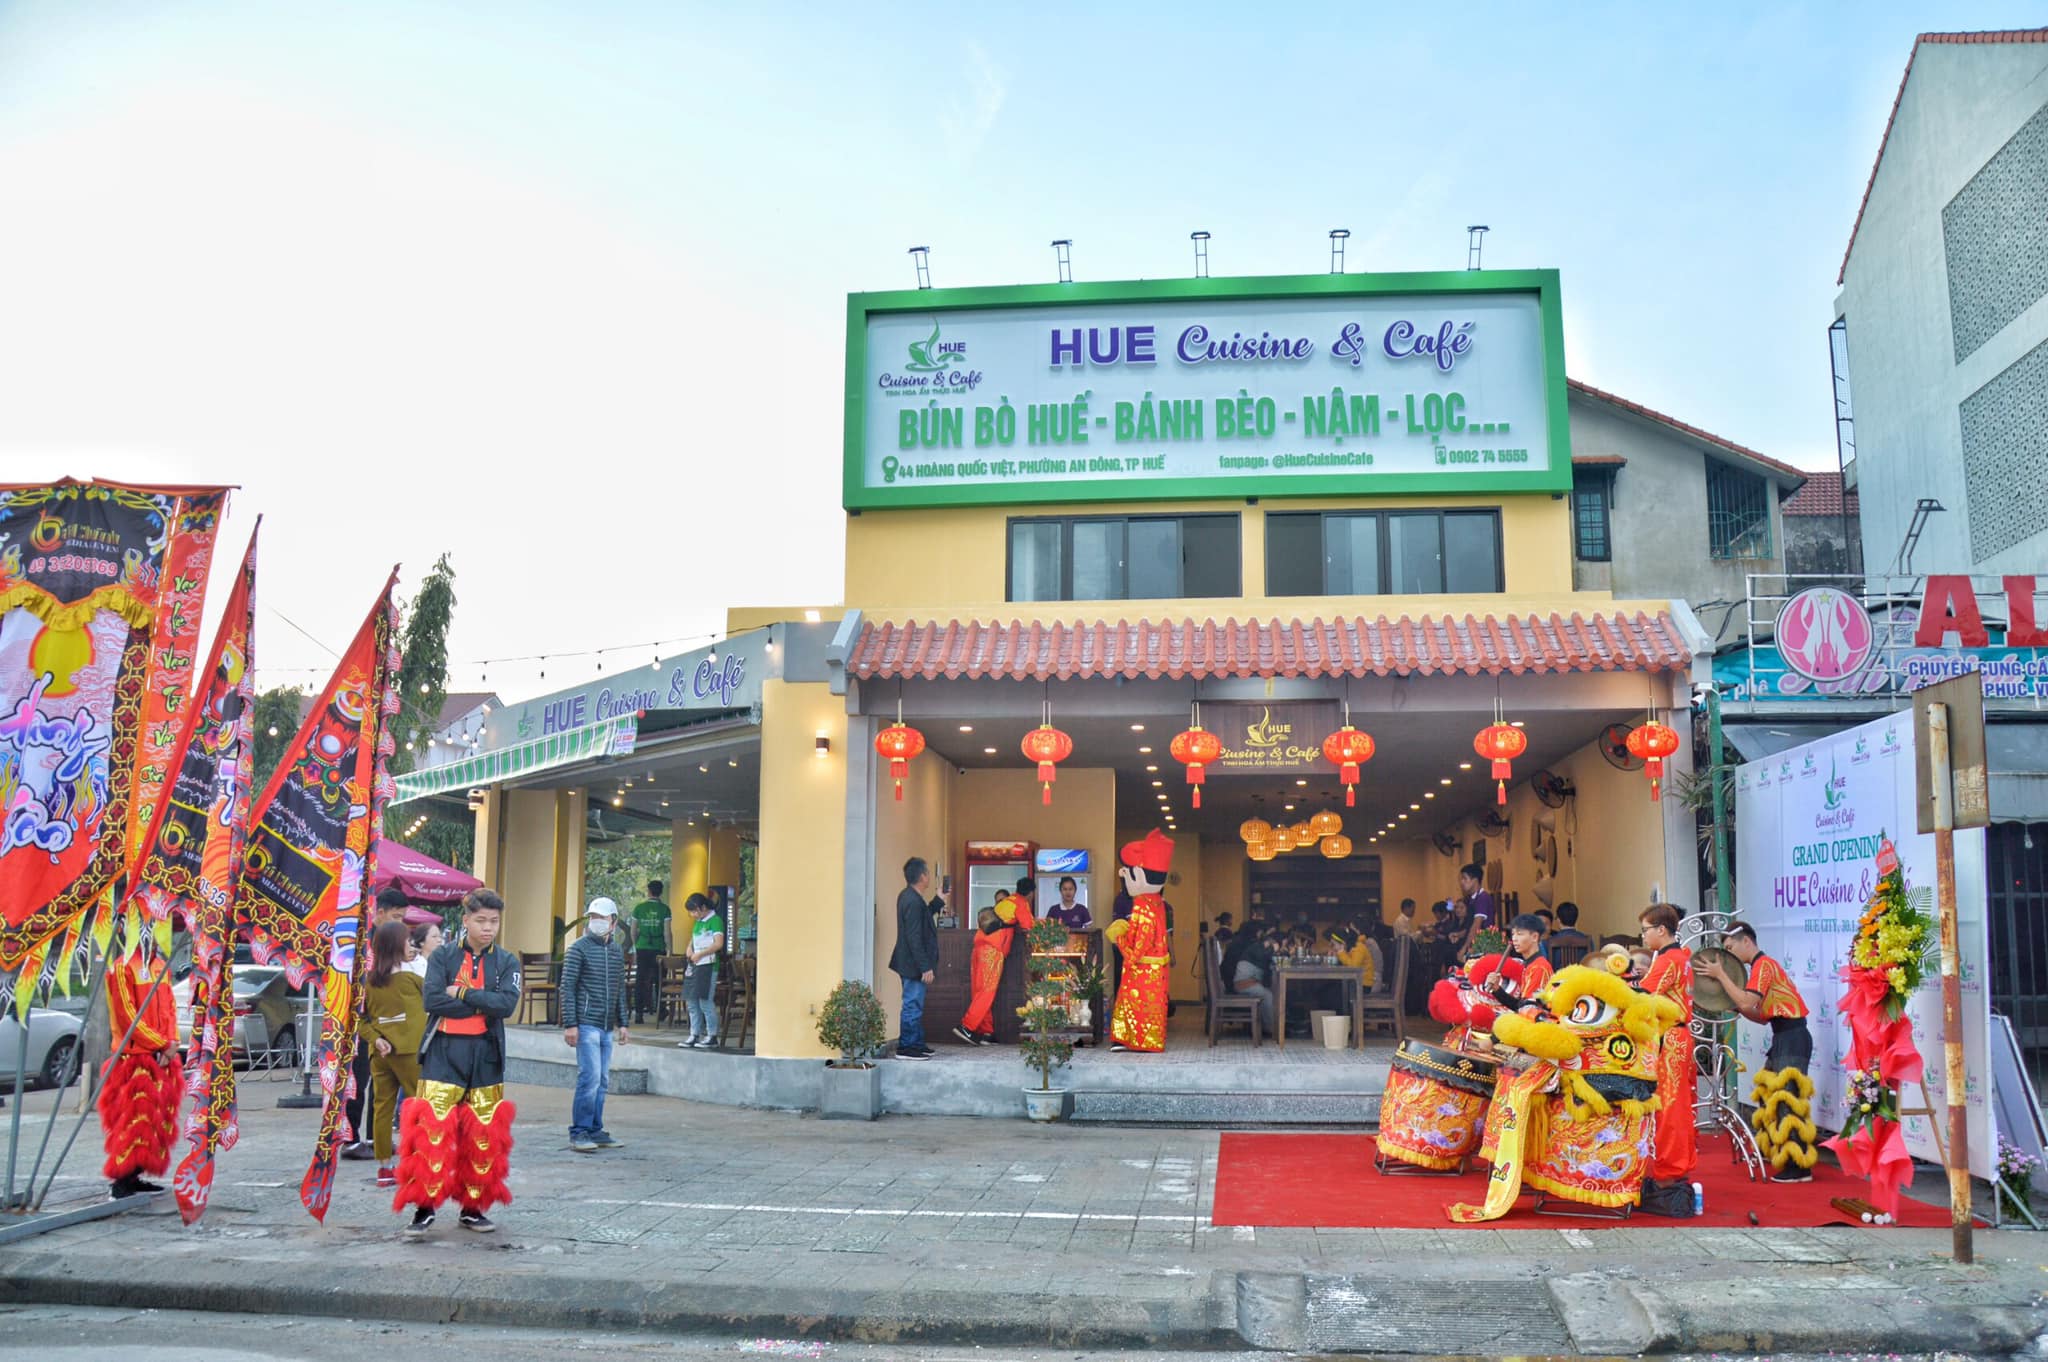 Hue cuisine & Cafe